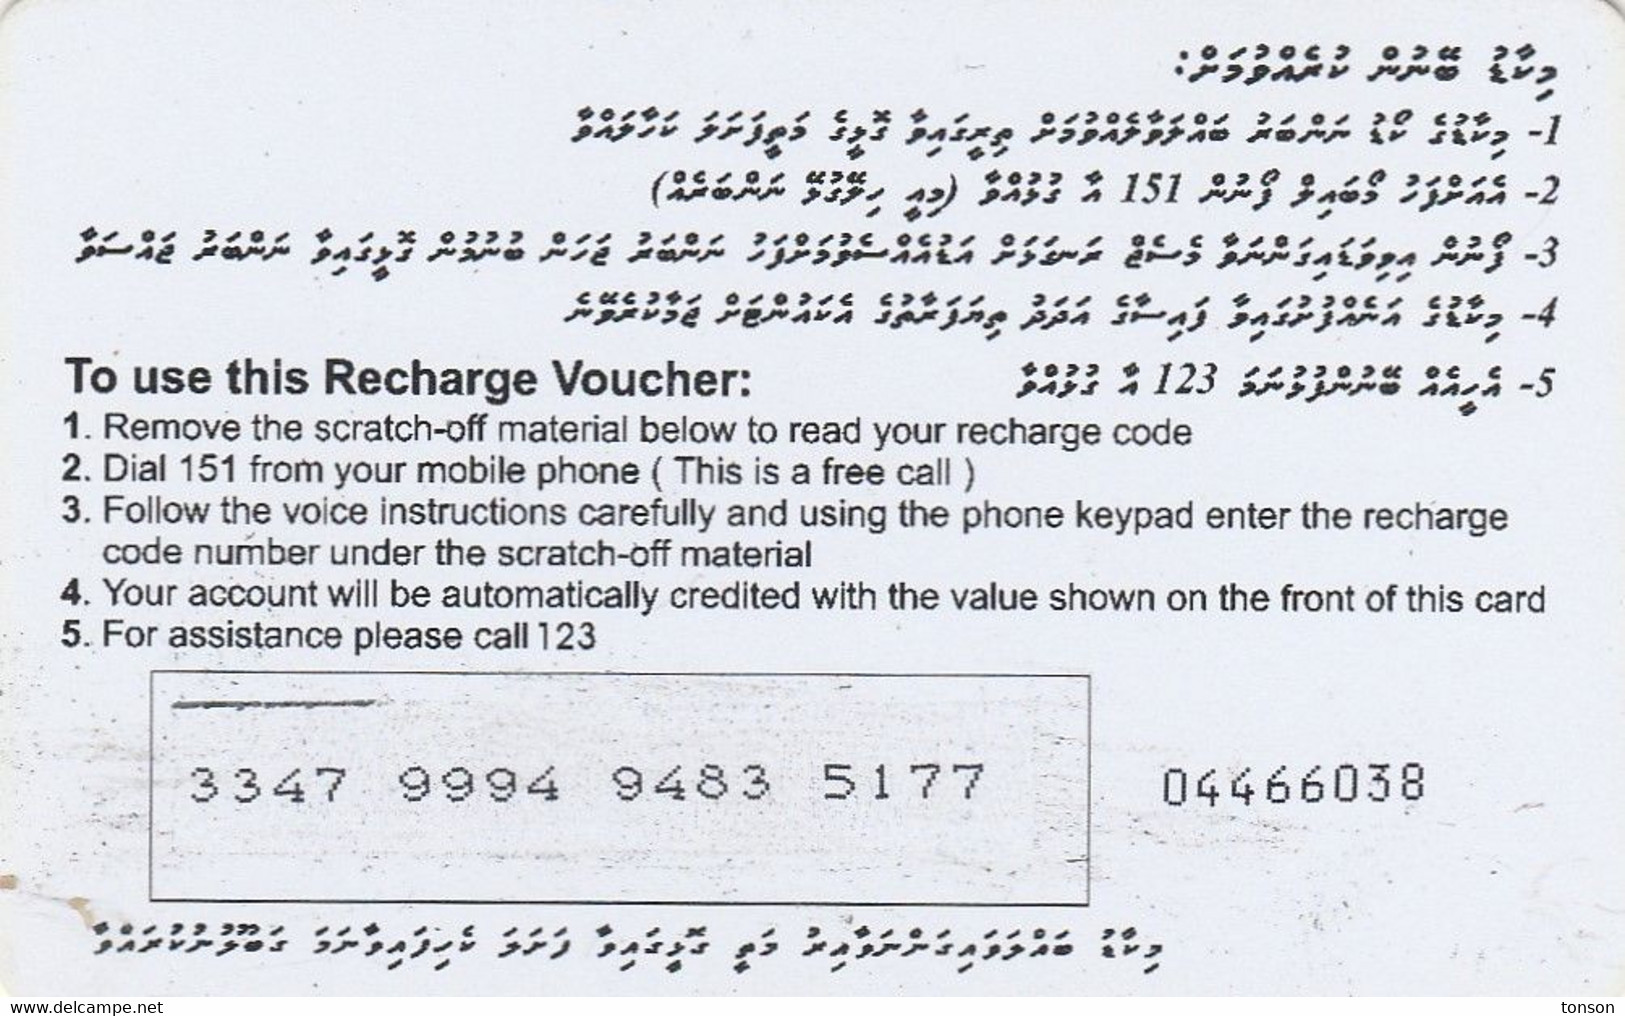 Maldives,  DhiMobile Rf 100, Boats And Palms, 2 Scans. - Maldiven